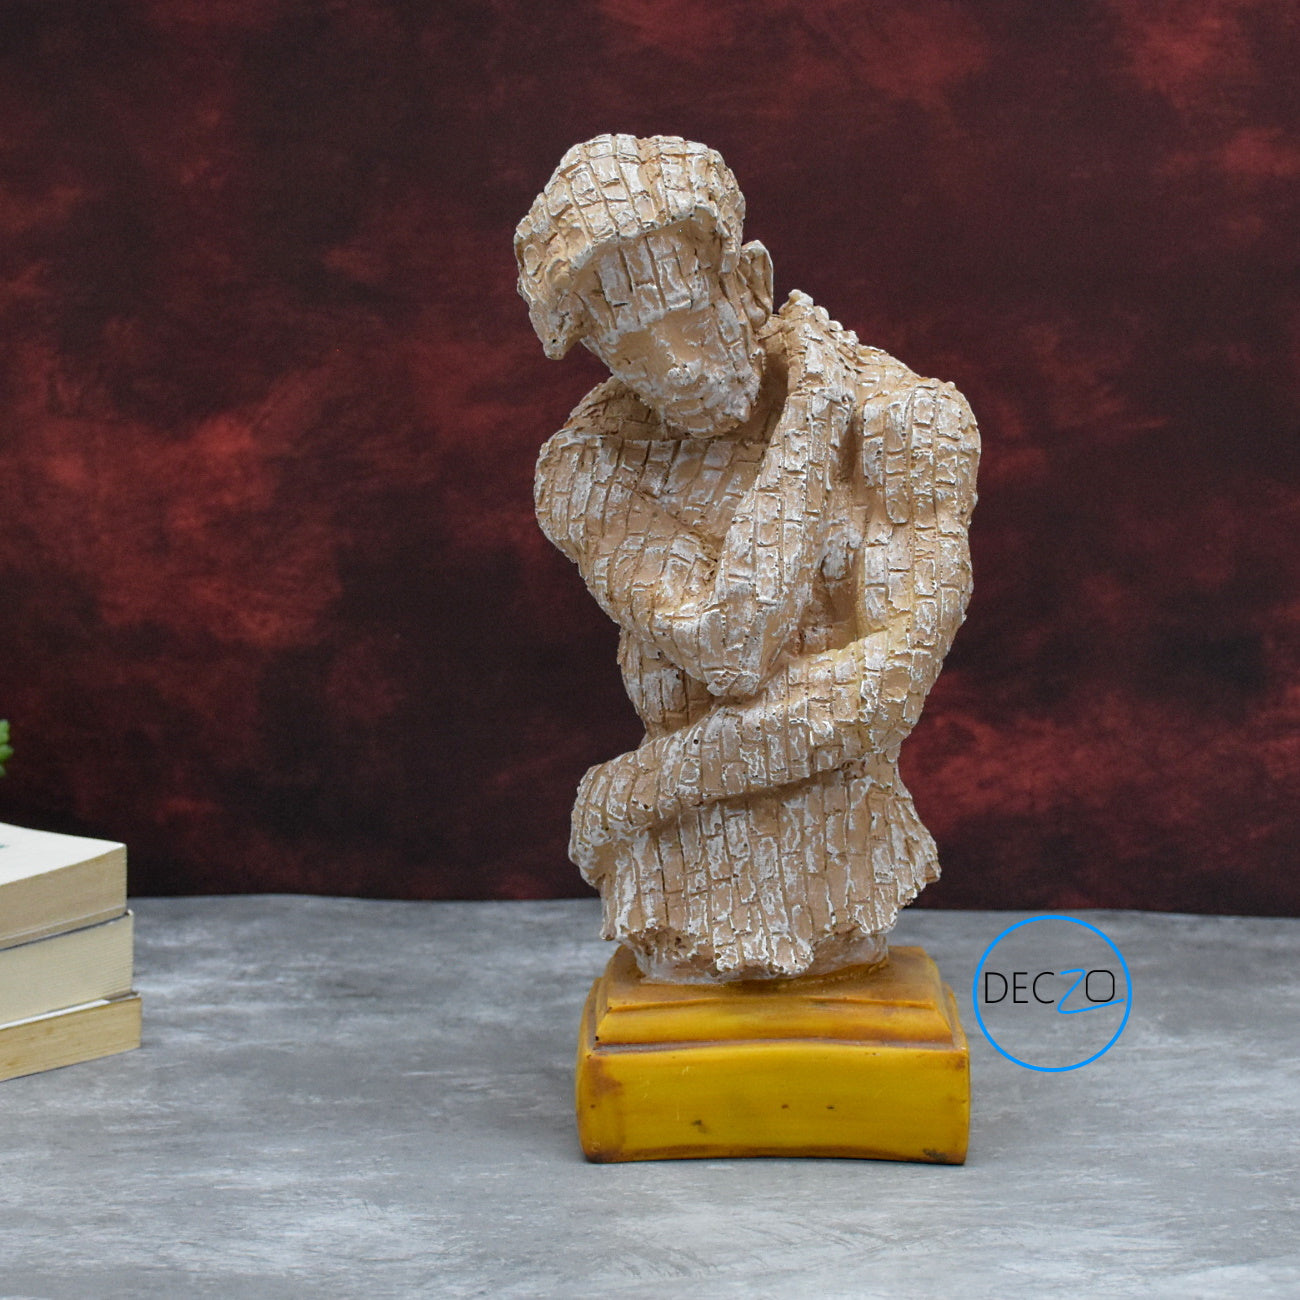 Modern Art Brick Man in Holding Position Showpiece for Table Decor, Gift